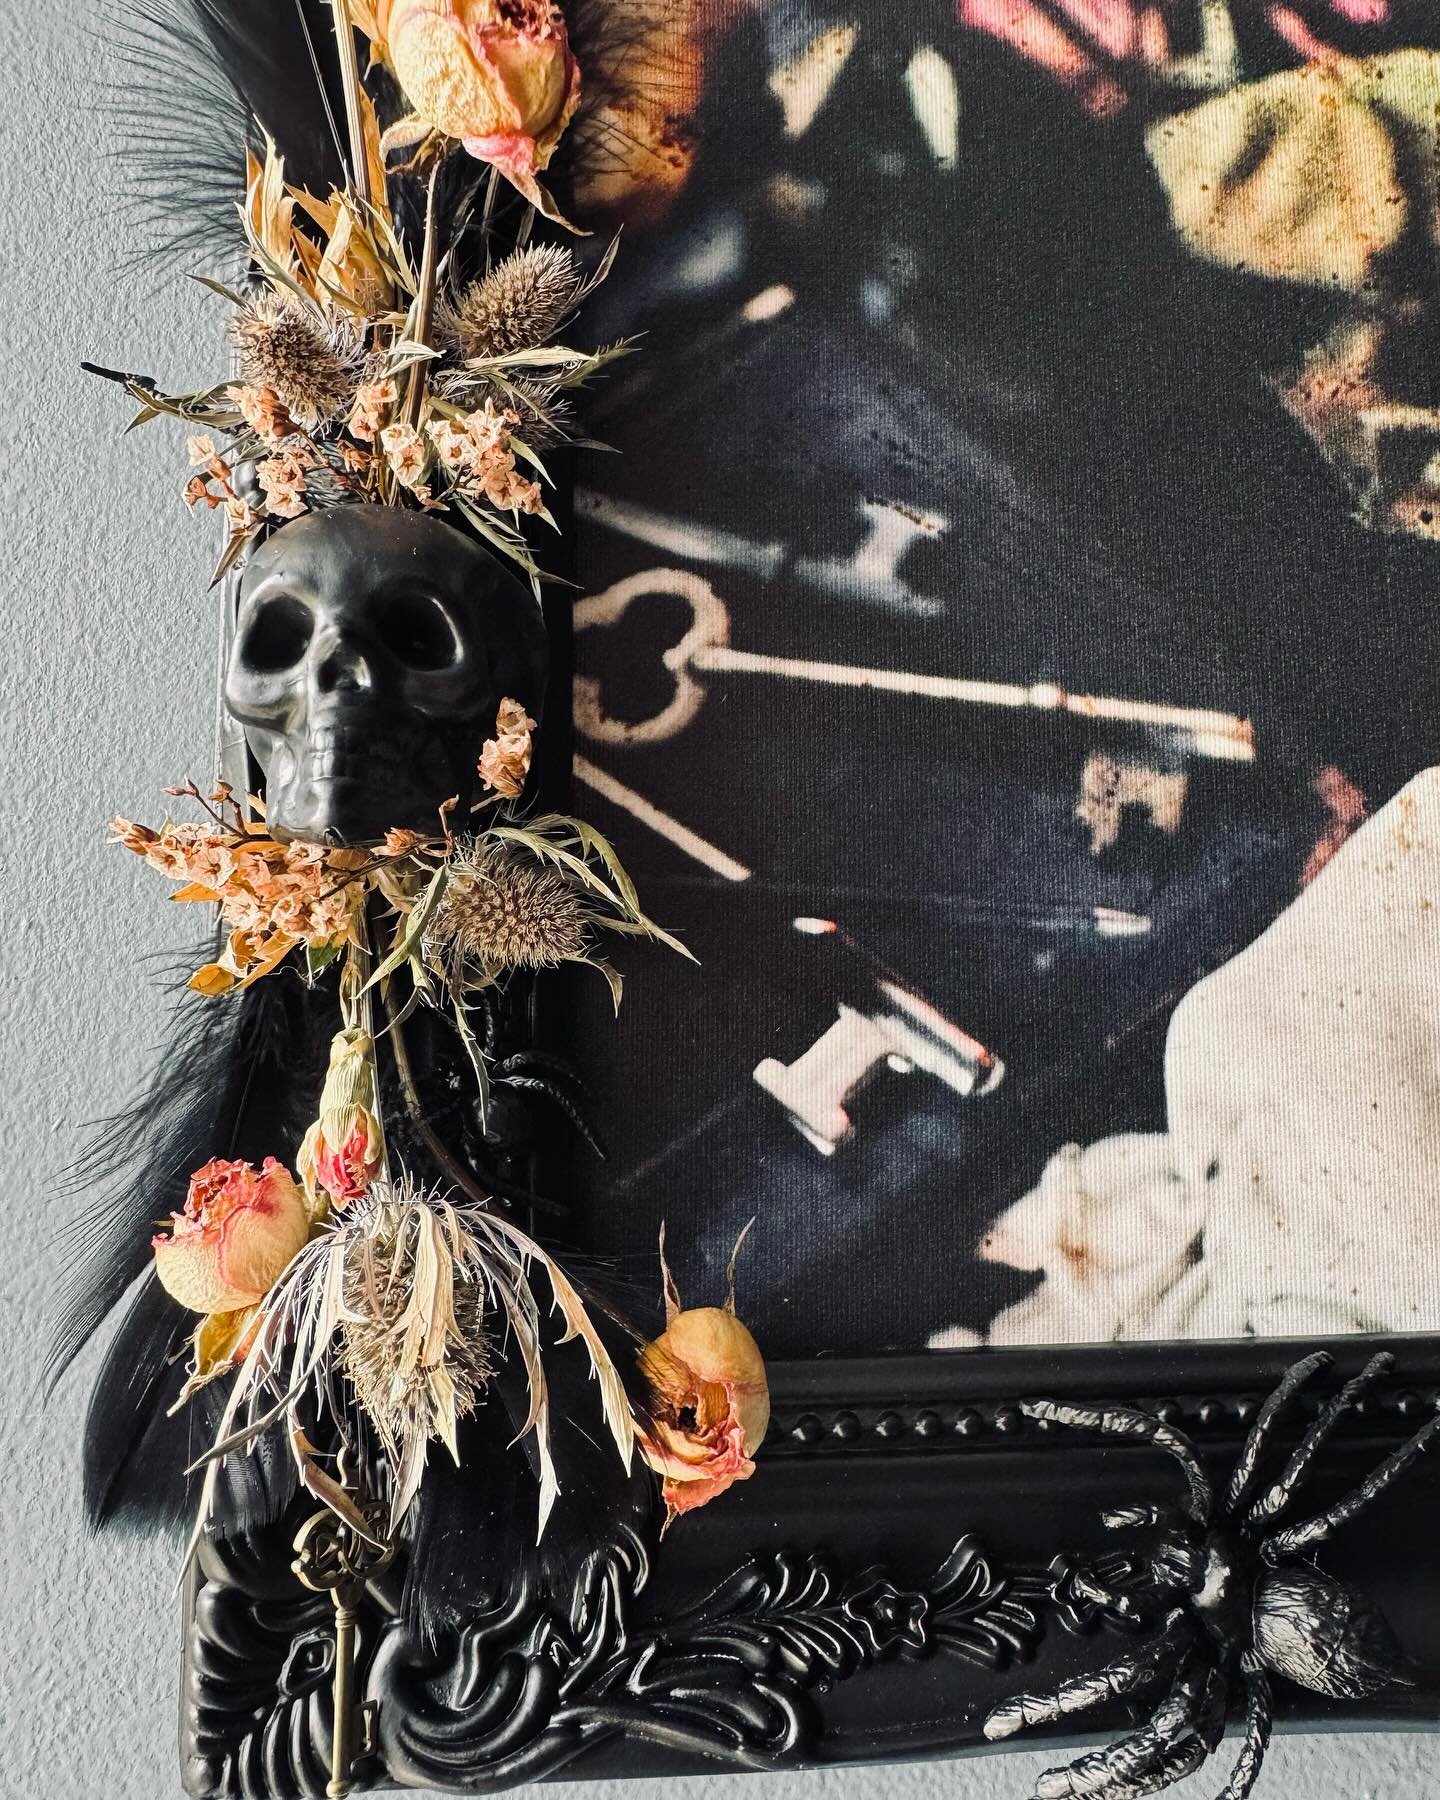 𝐶𝑟𝑒𝑒𝑝𝑦 𝐷𝑜𝑙𝑙 𝐻𝑎𝑛𝑔𝑖𝑛𝑔𝑠 𖨆
ᴱᶻᴹᴱᴿᴬᴸᴰᴬ ᴮᴸᴬᶜᴷ 
warded dead ғraмe⁂
www.Ezmeraldablack.com 
 ☽ᐁ&there4;ꪉ𖠋  ᵖʰᵒᵗᵒᵍ @cevet_jones 
#victorian #creepydoll #deadflowers #asteticphotography #haunted #witches #twinflame  #twinflamejourney #framed